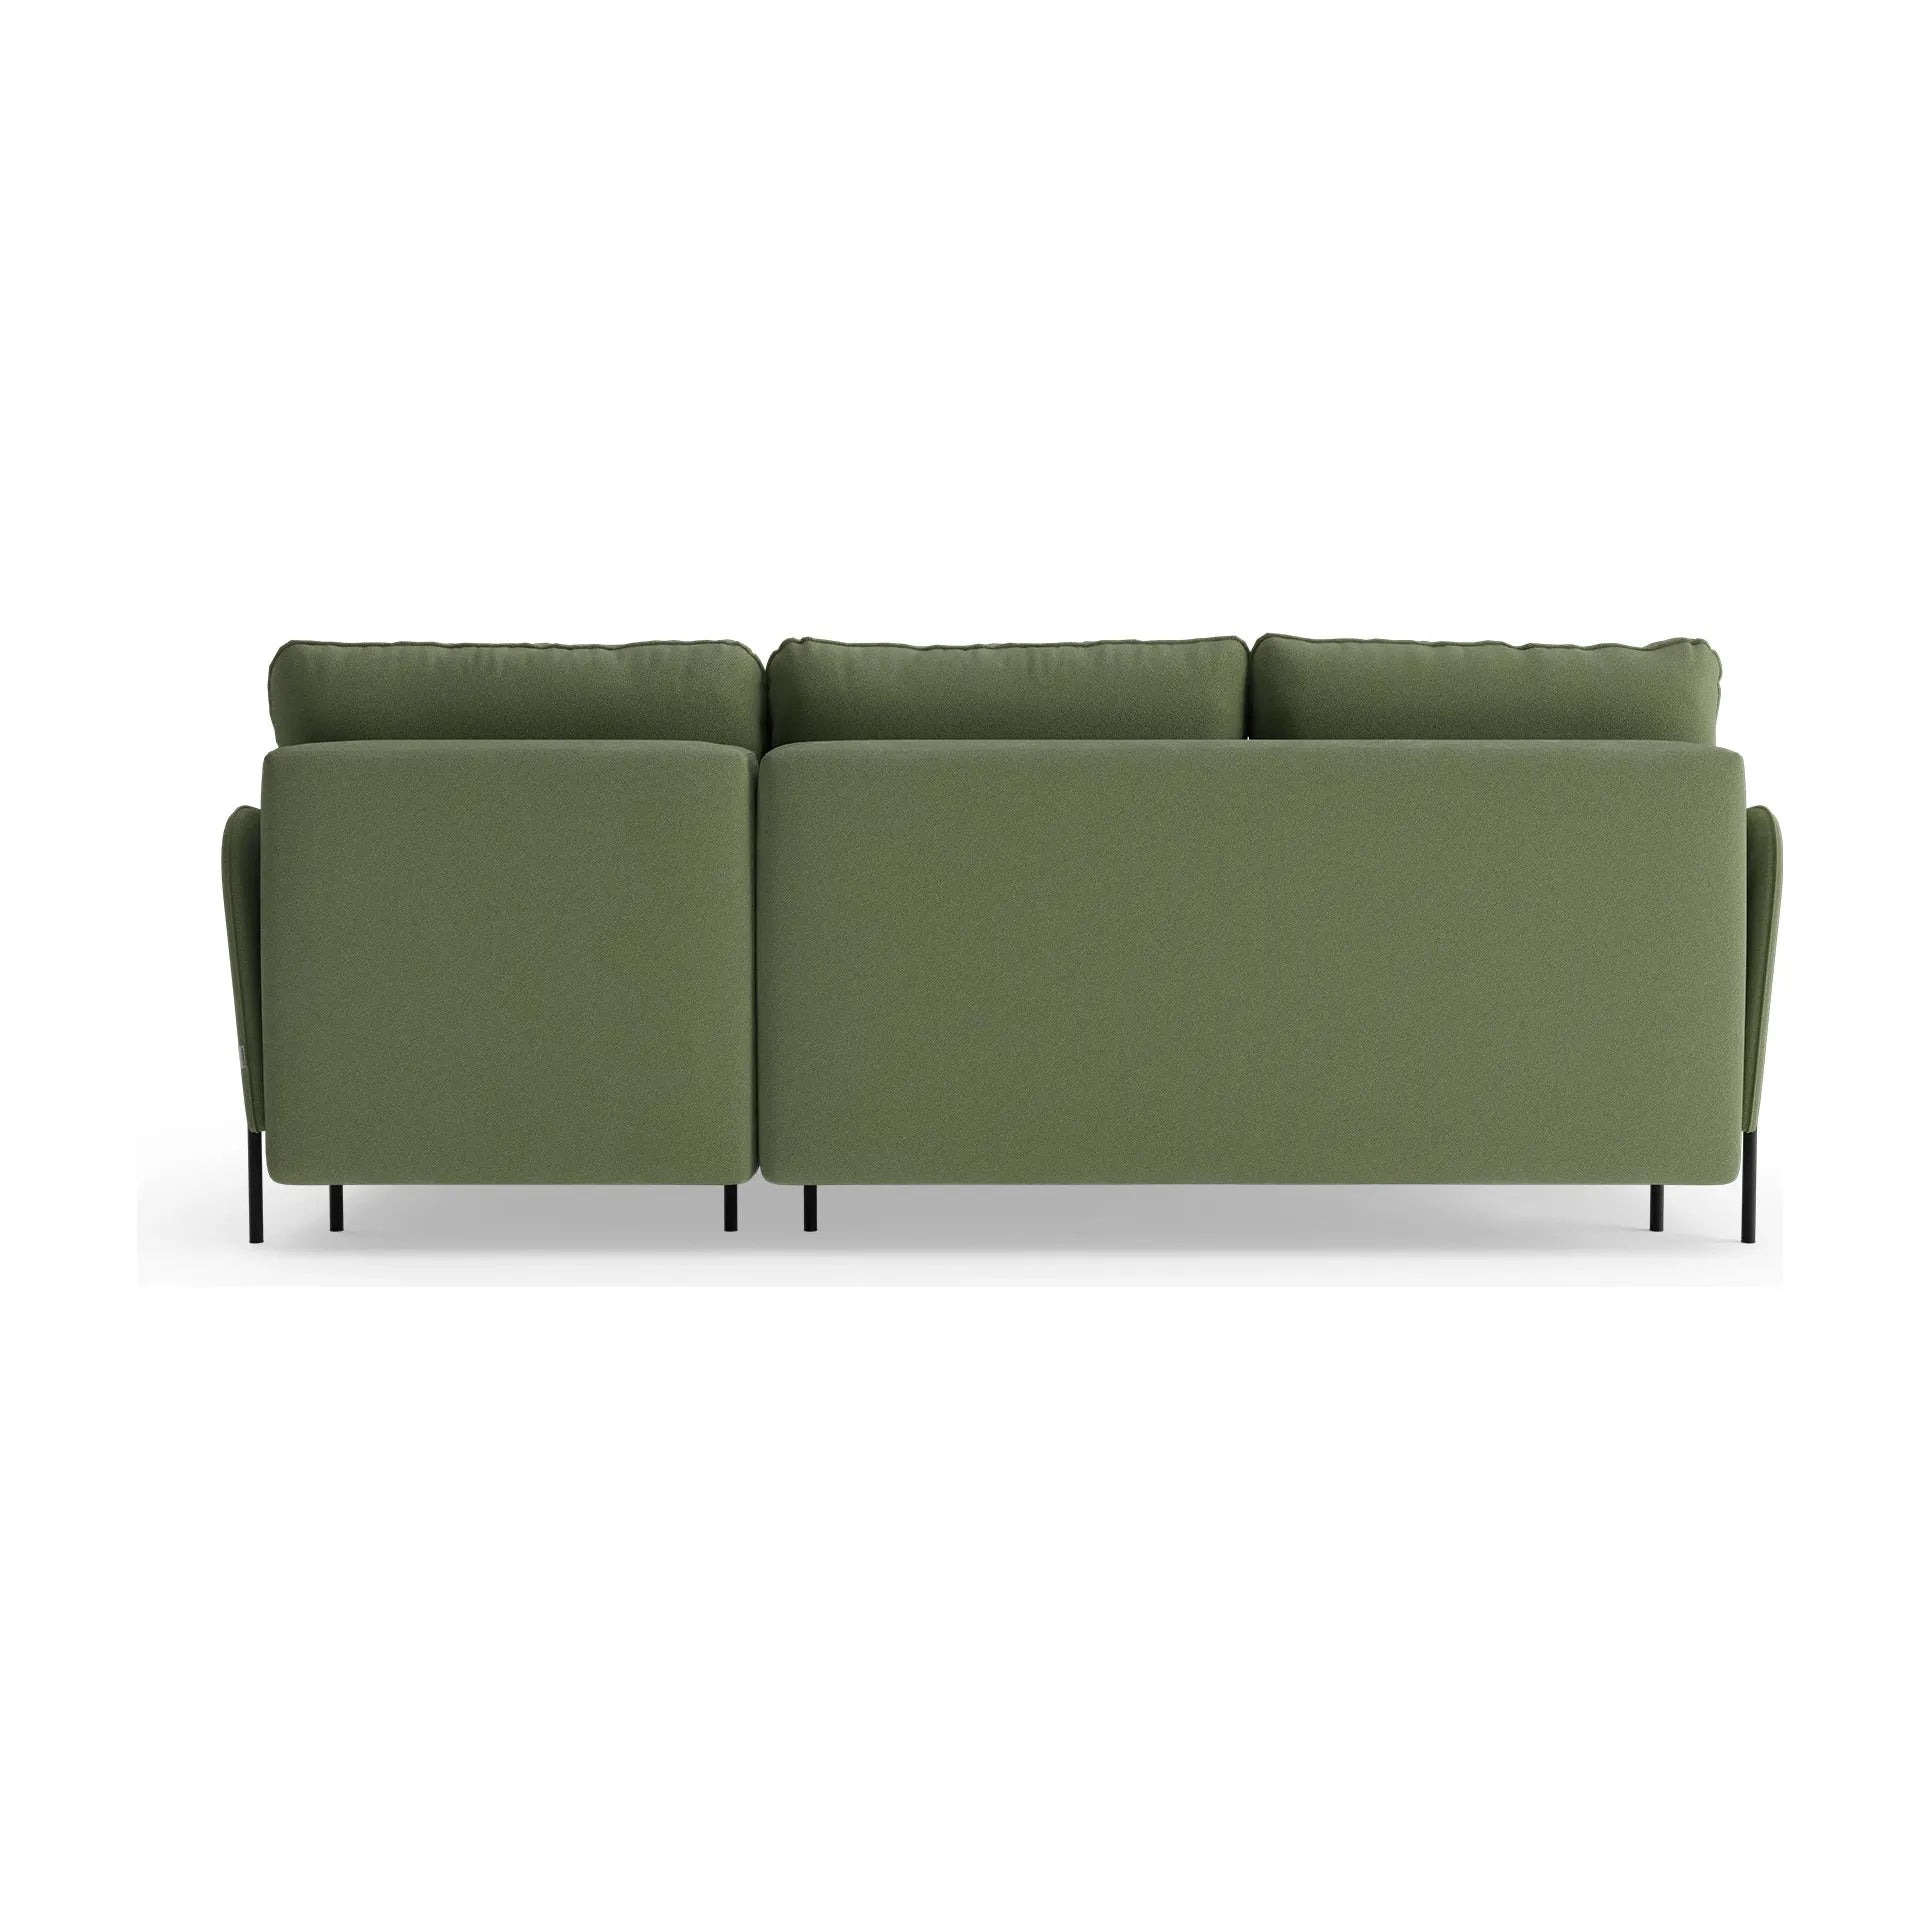 BONNIE kampinė sofa, miegojimo funkcija, žalia spalva